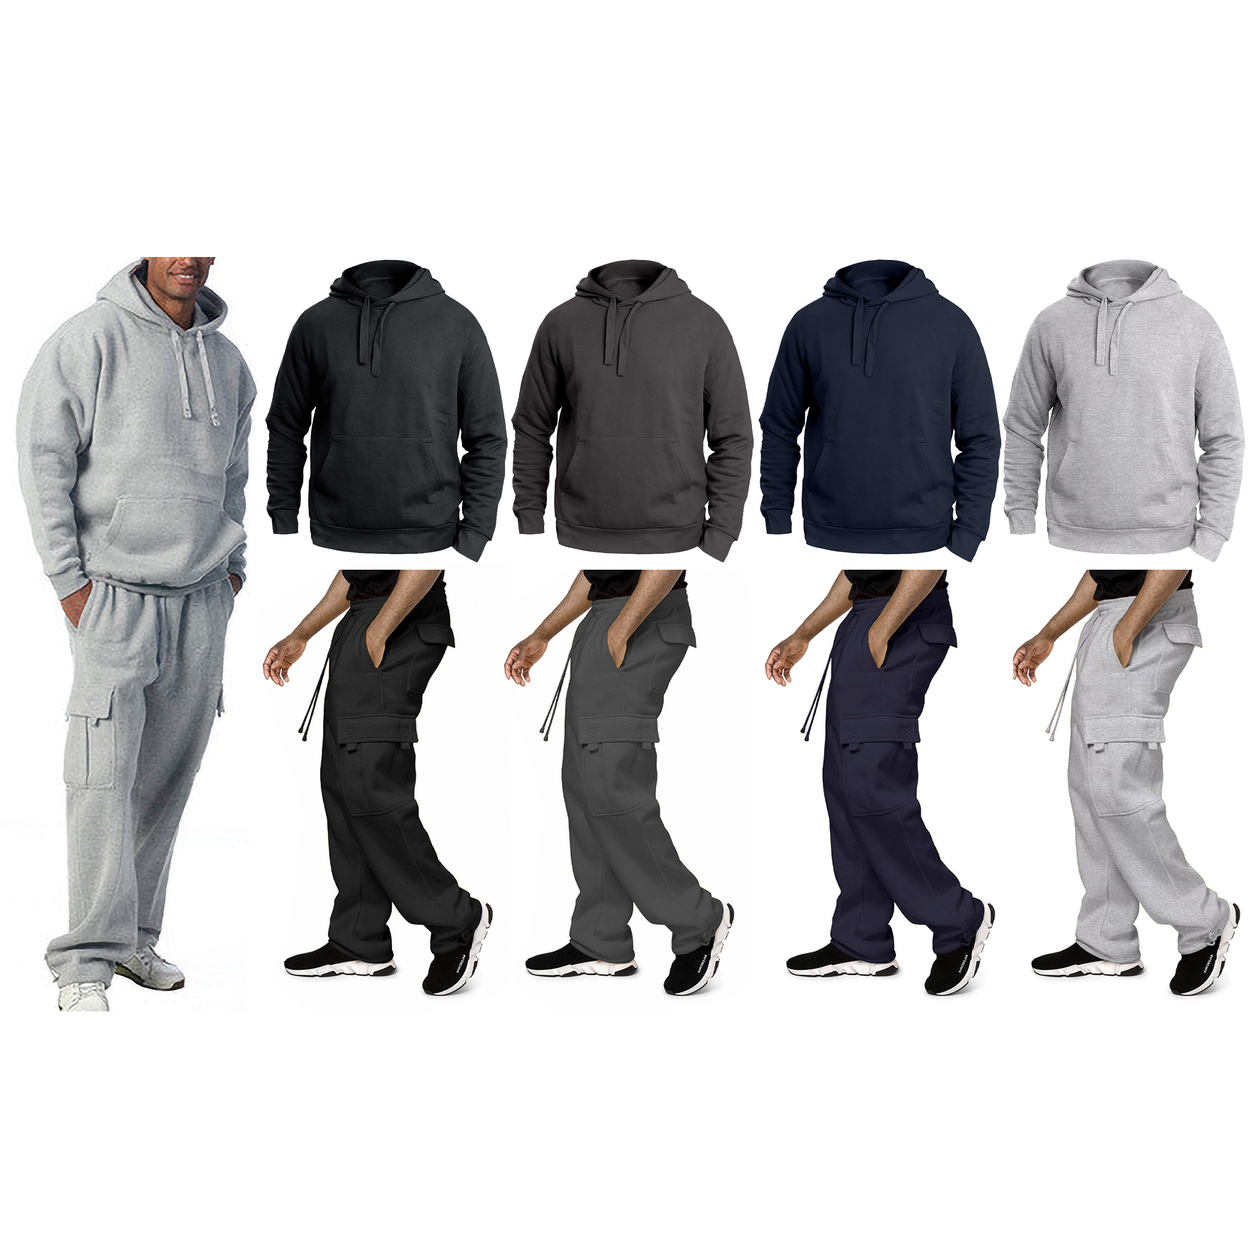 2-Pack: Men's Big & Tall Winter Warm Cozy Athletic Fleece Lined Multi-Pocket Cargo Sweatsuit - Grey, Small